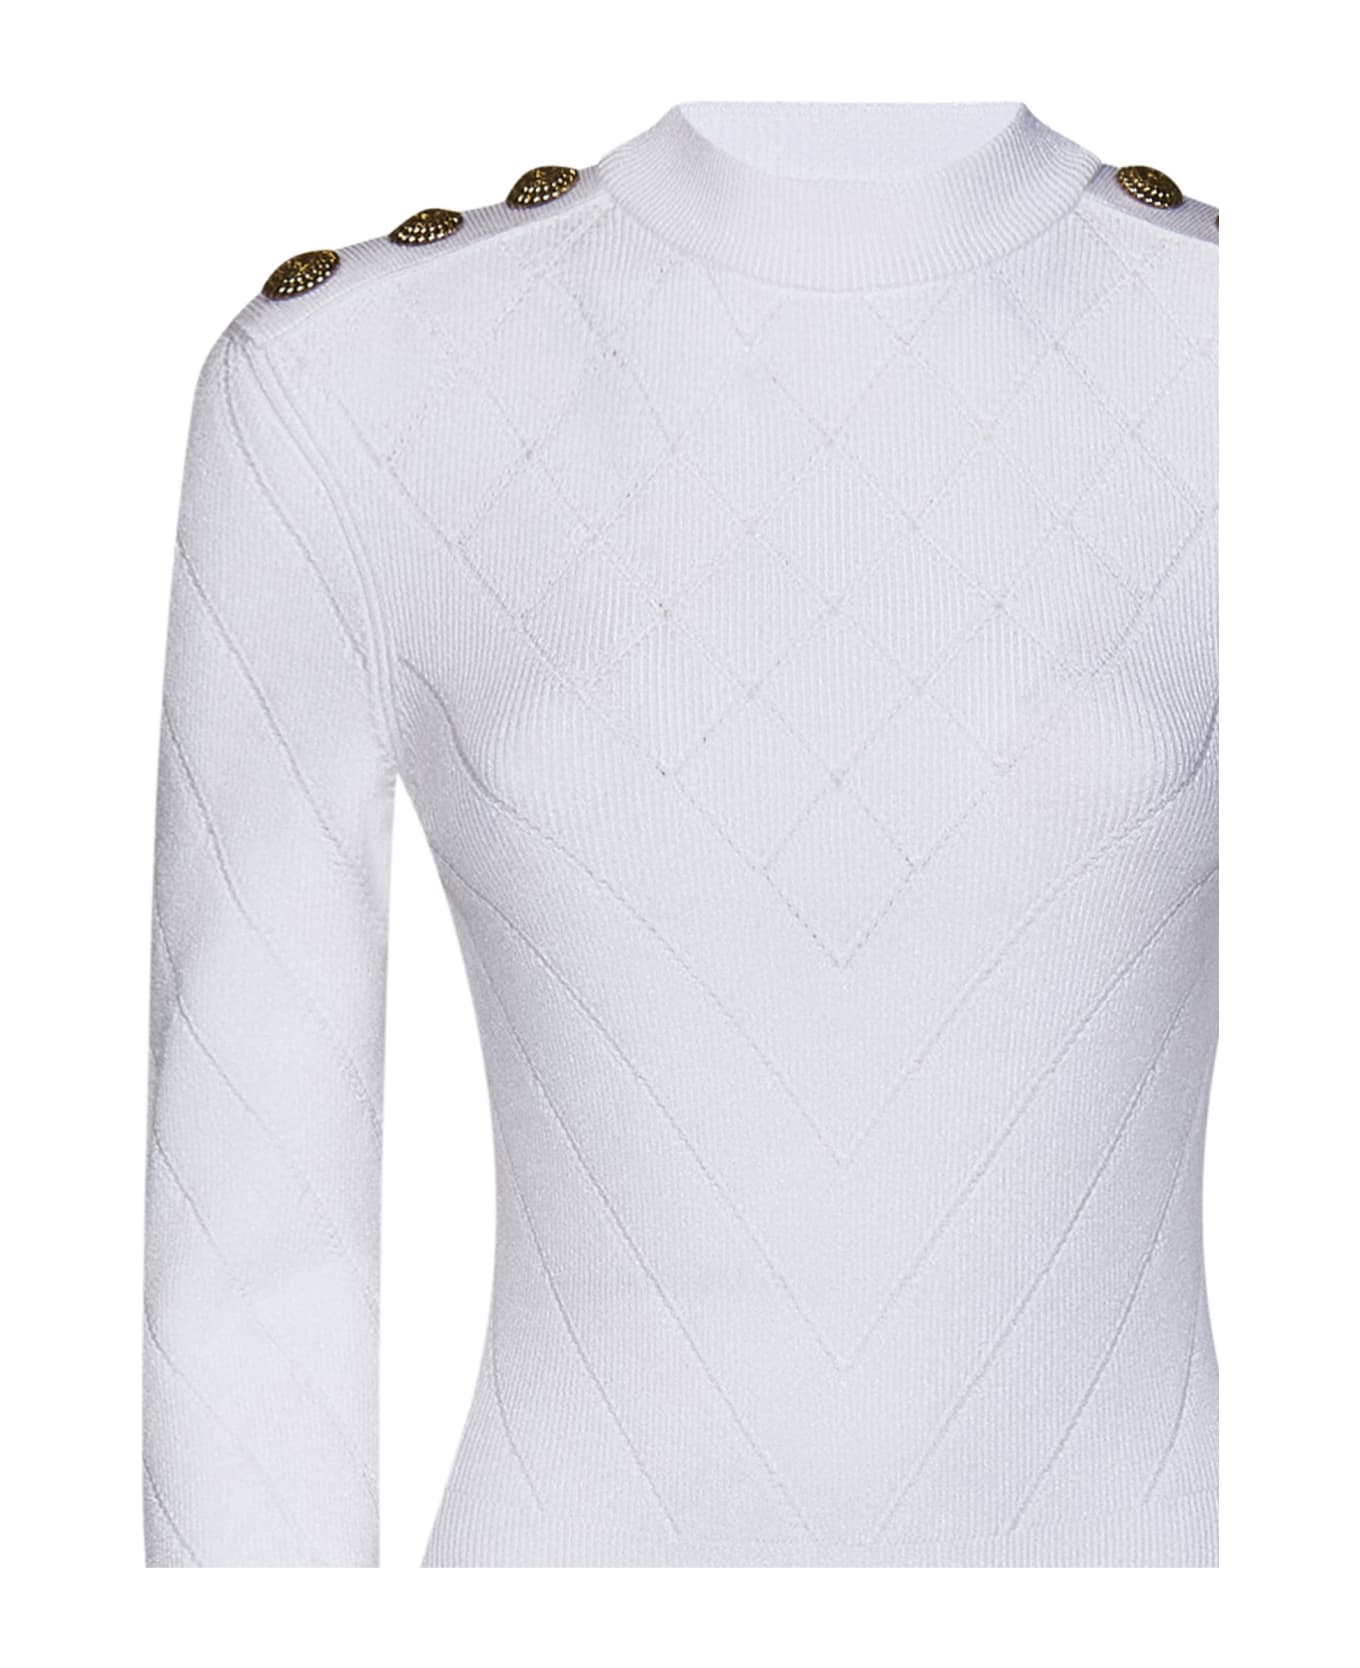 Balmain Bodysuit - White